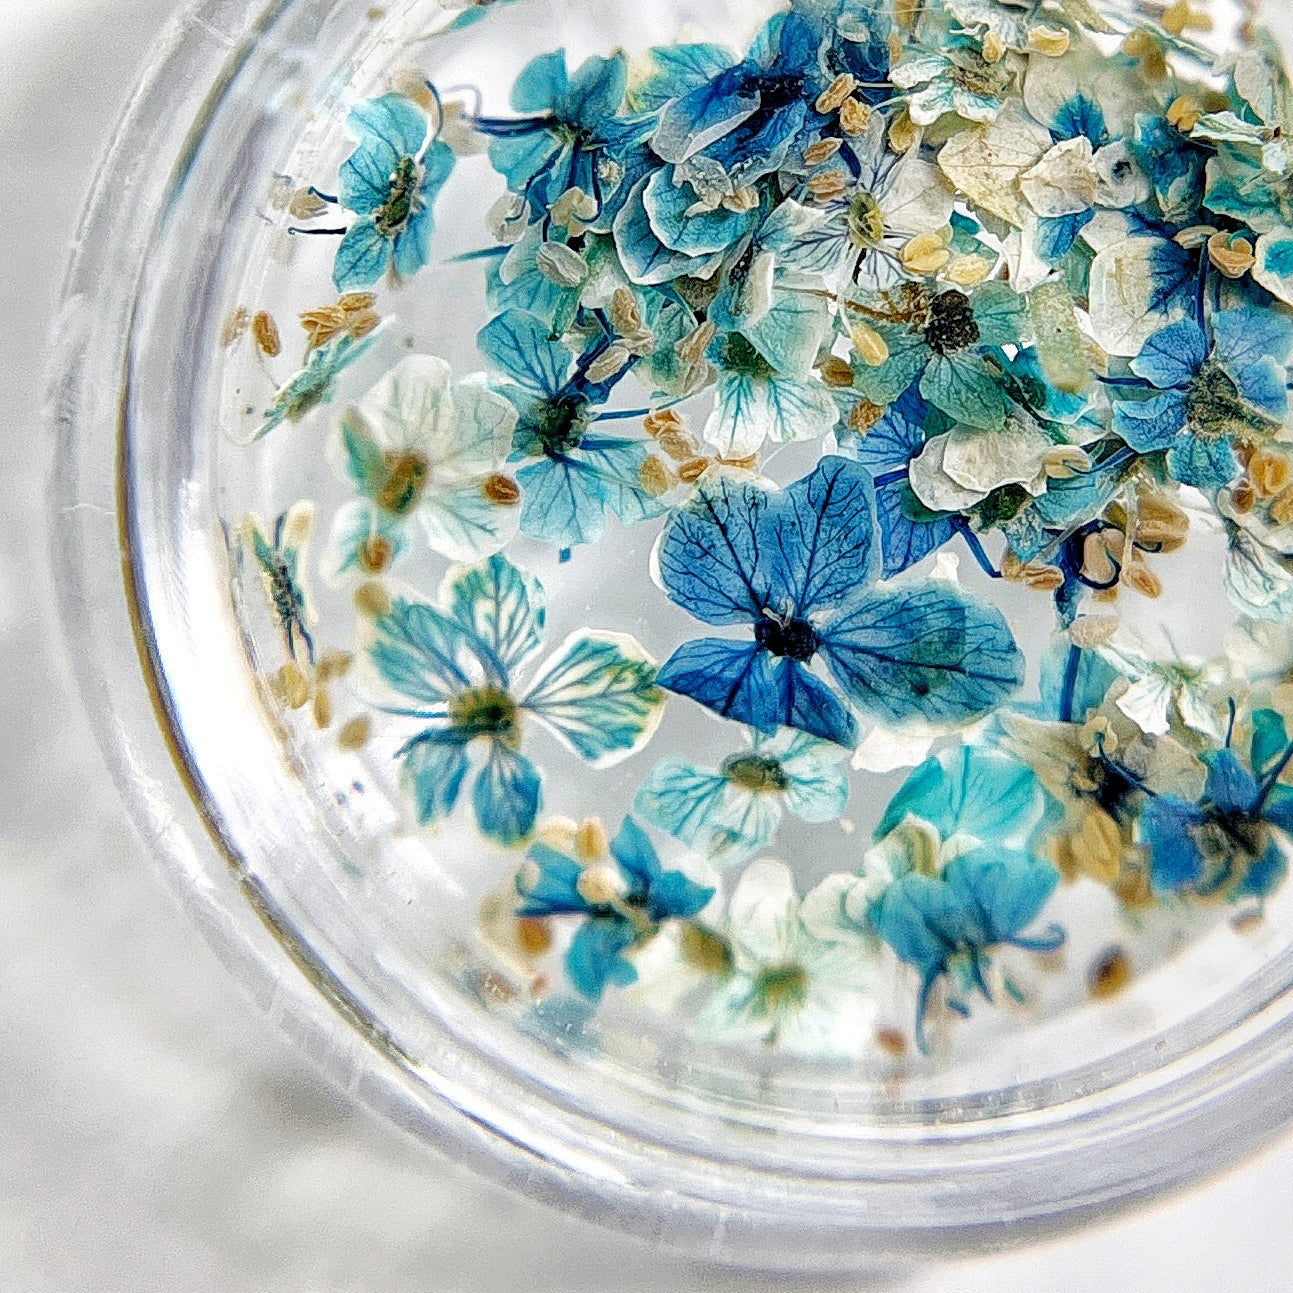 Petite Bloom in Capri- Multi-Tonal Blue Pressed Flower Mix in Jar, Presented on White Background.